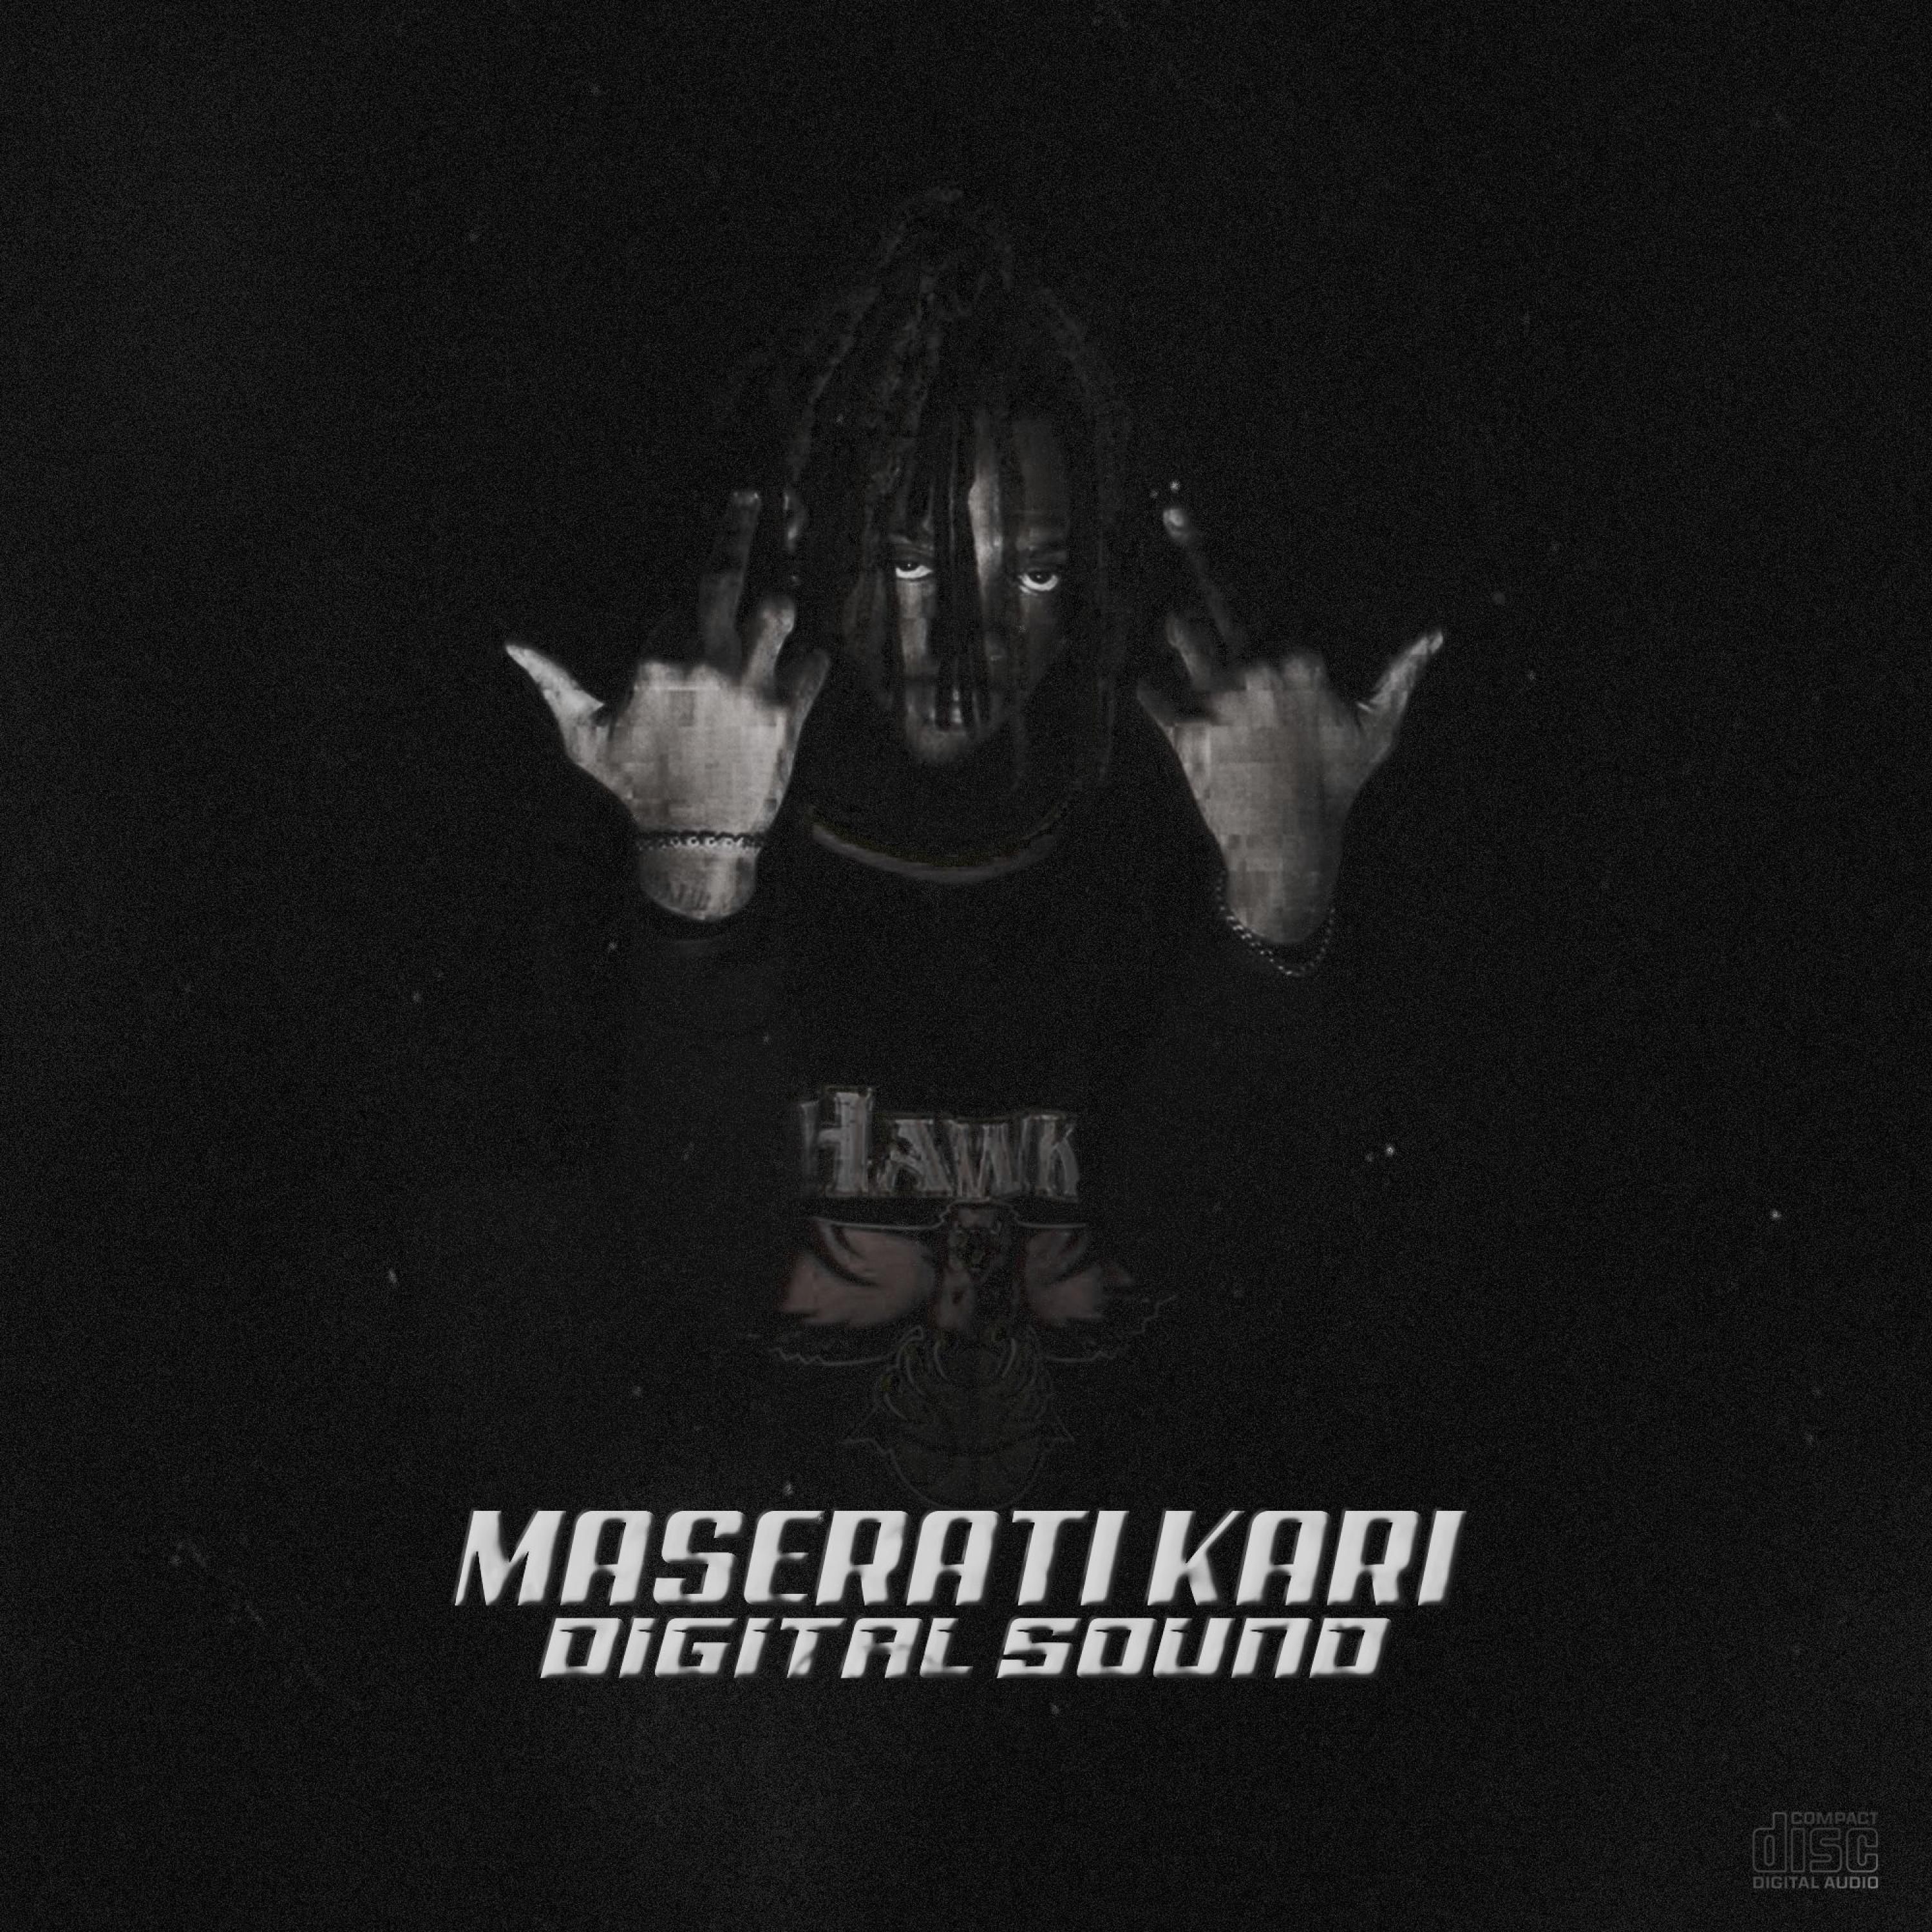 MaseratiKari - Chit Chat (feat. Digitalwave)